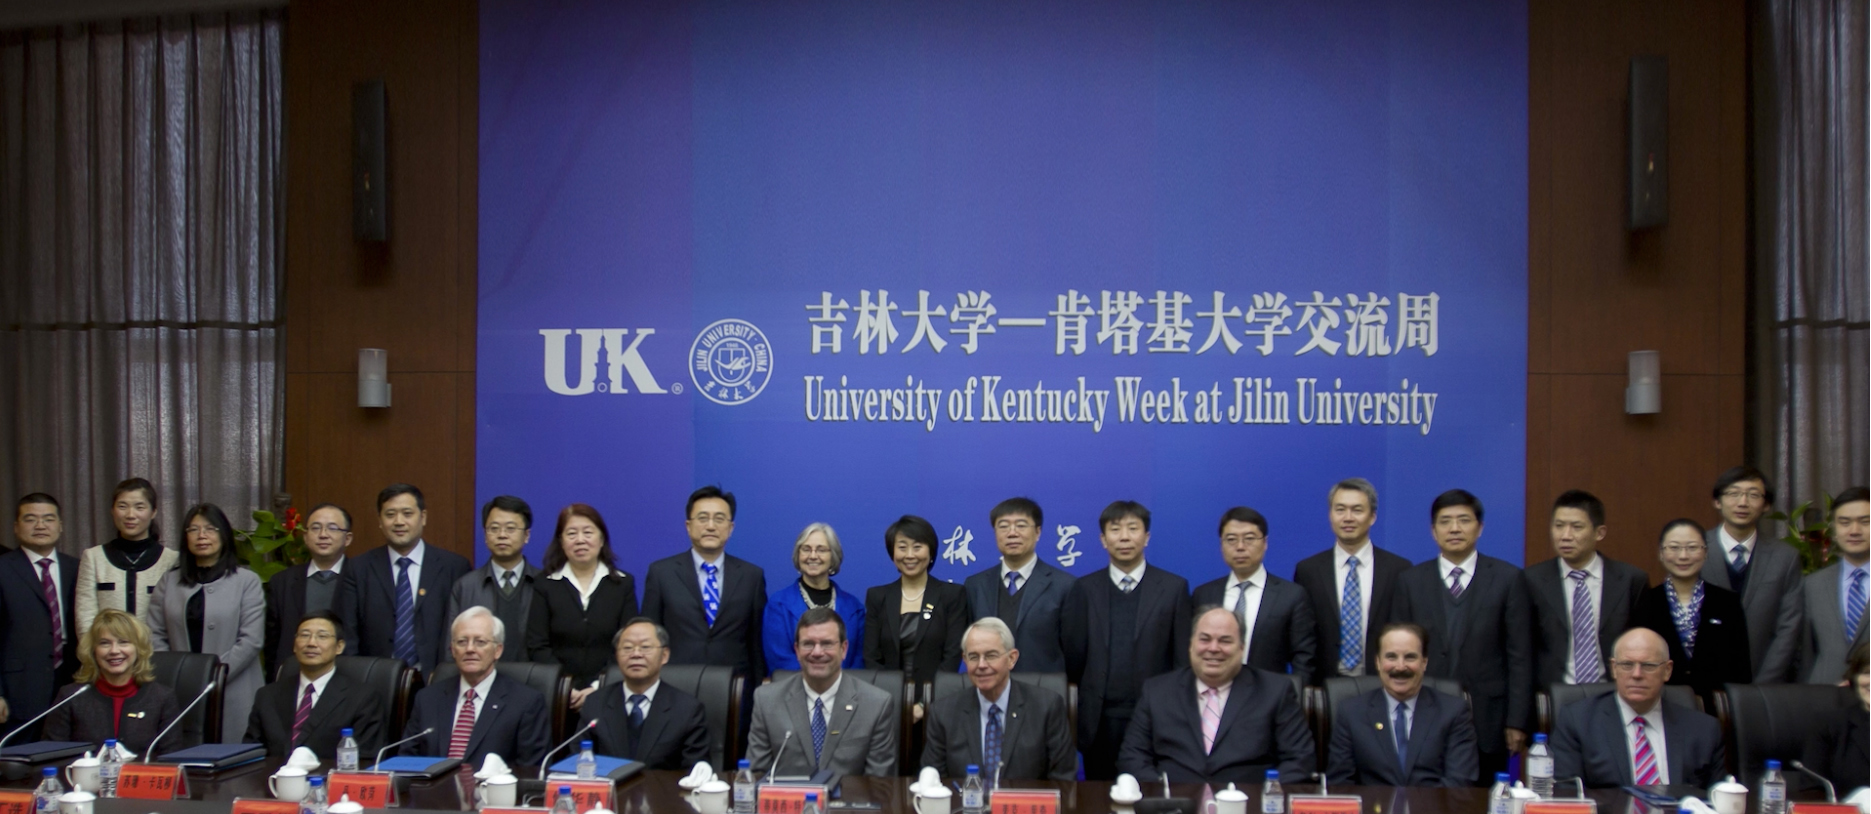 UK delegation and Jilin University leadership. Photo courtesy of Hanban.